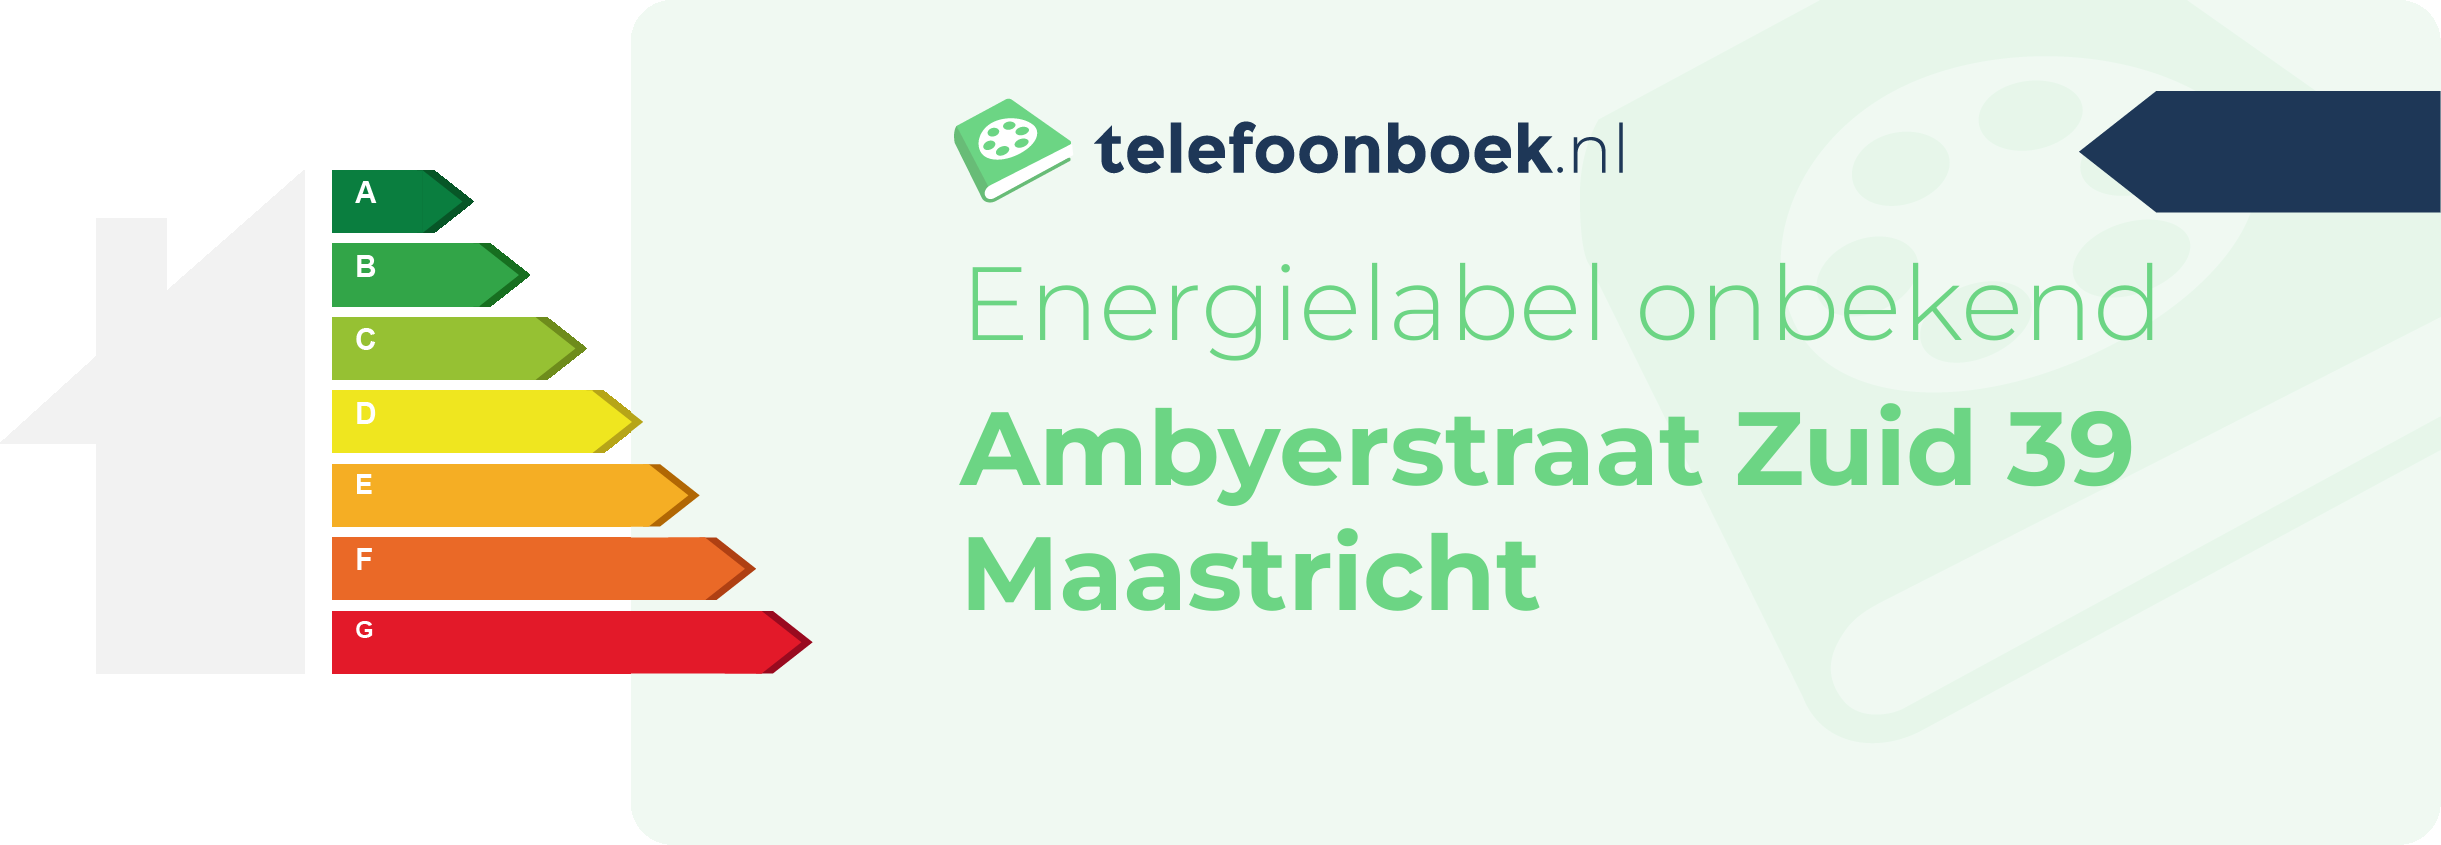 Energielabel Ambyerstraat Zuid 39 Maastricht